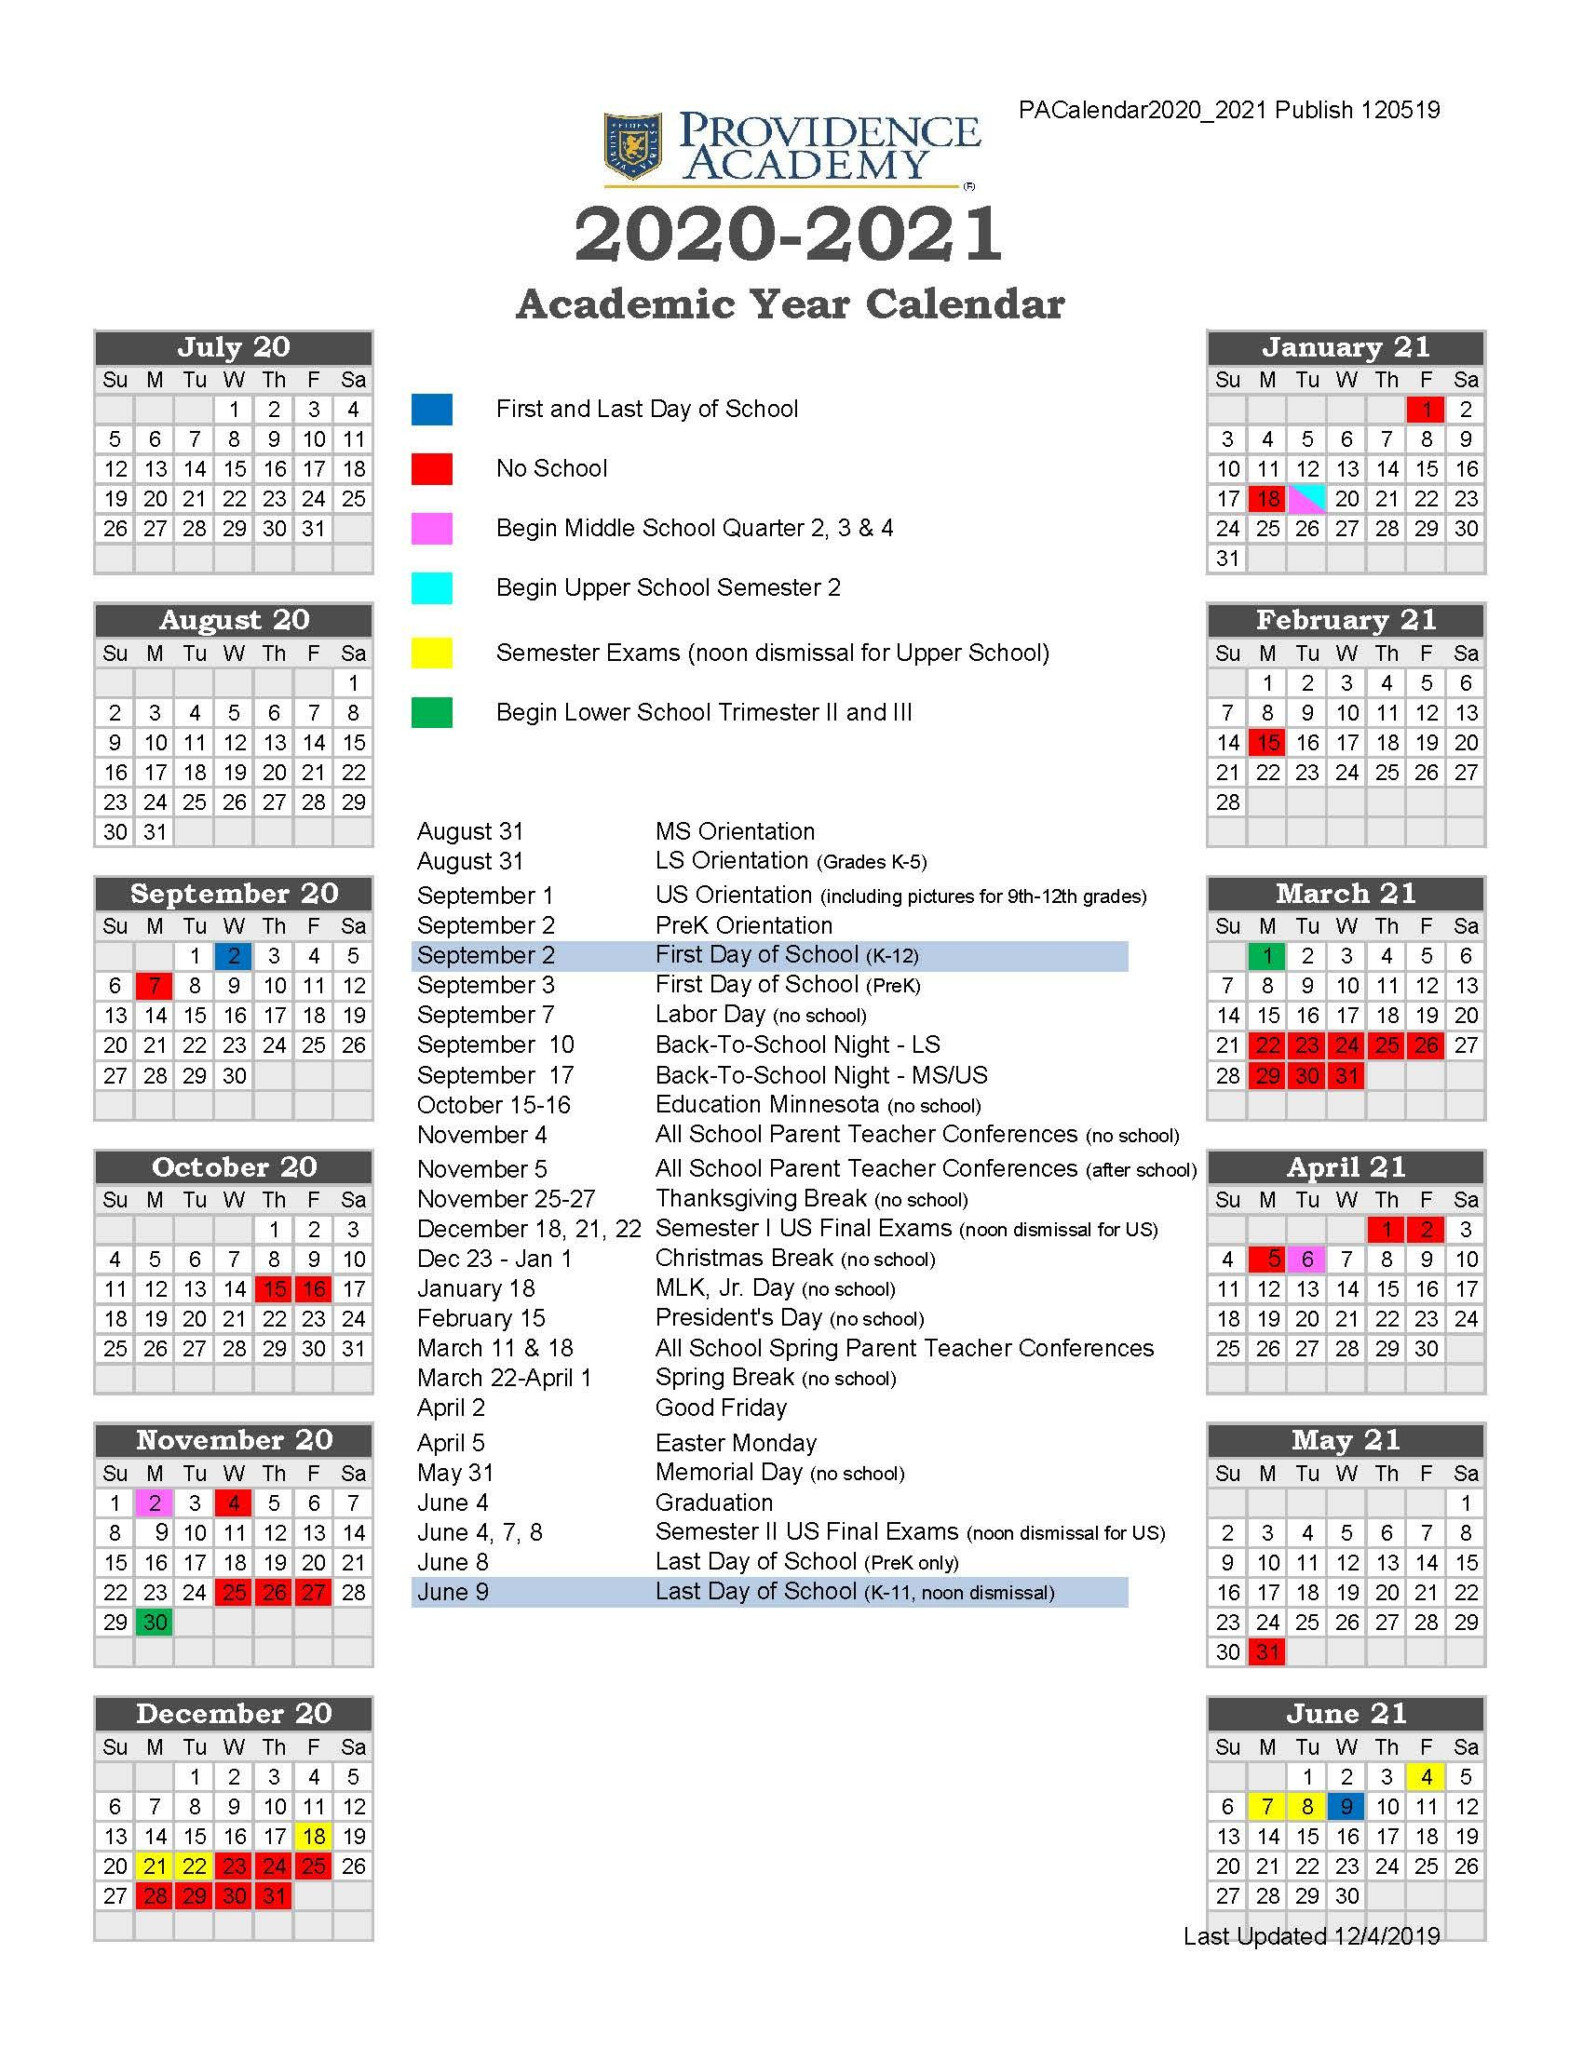 University Of Mn Academic Calendar Universitycalendars net